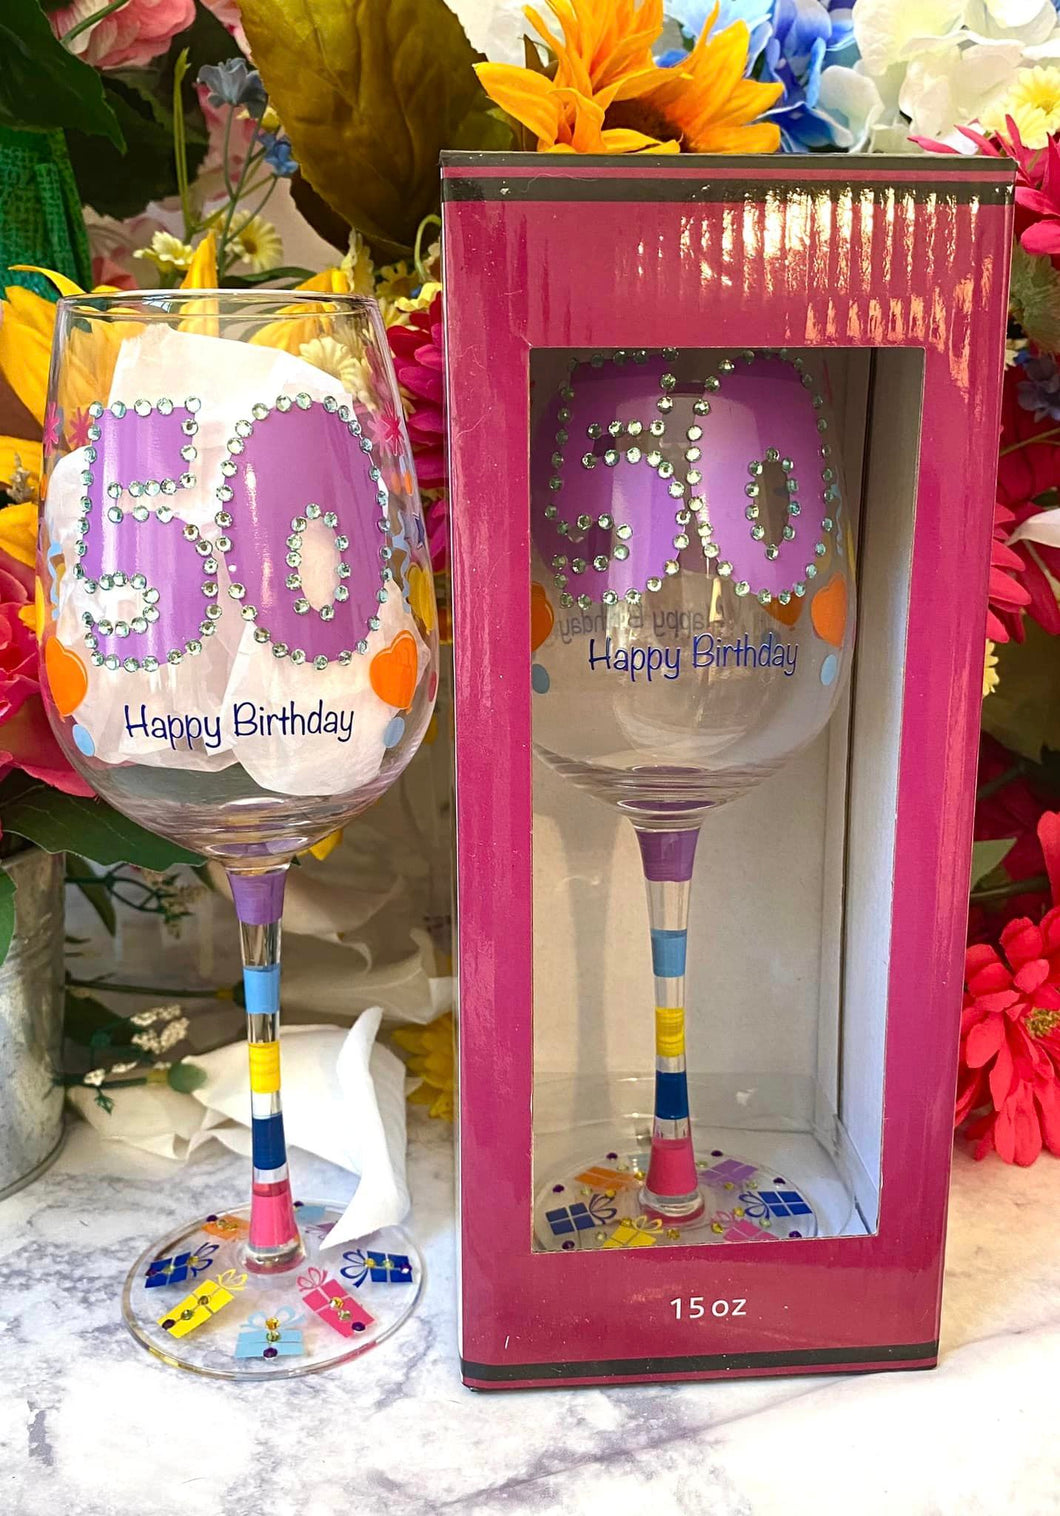 50 Happy Birthday Birthday Wine Glass with Box